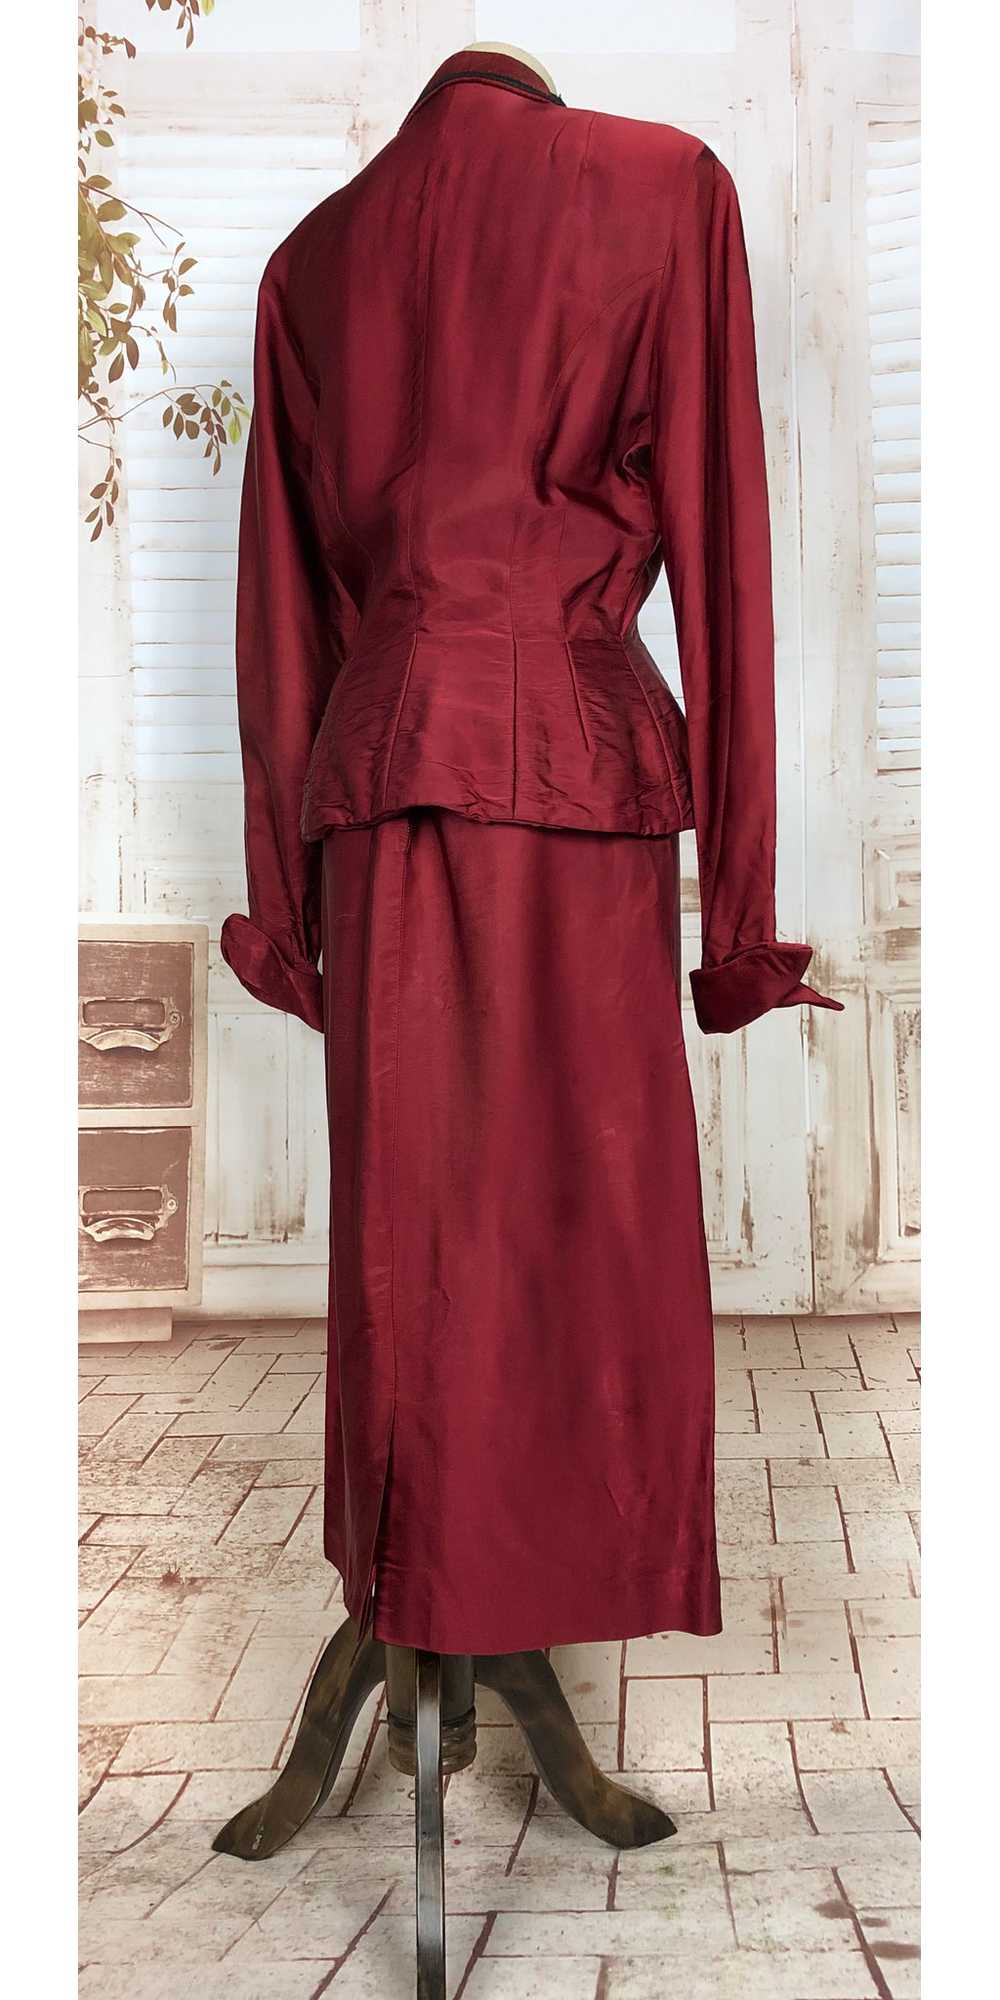 Exquisite Original 1940s Vintage Red And Black Fe… - image 9